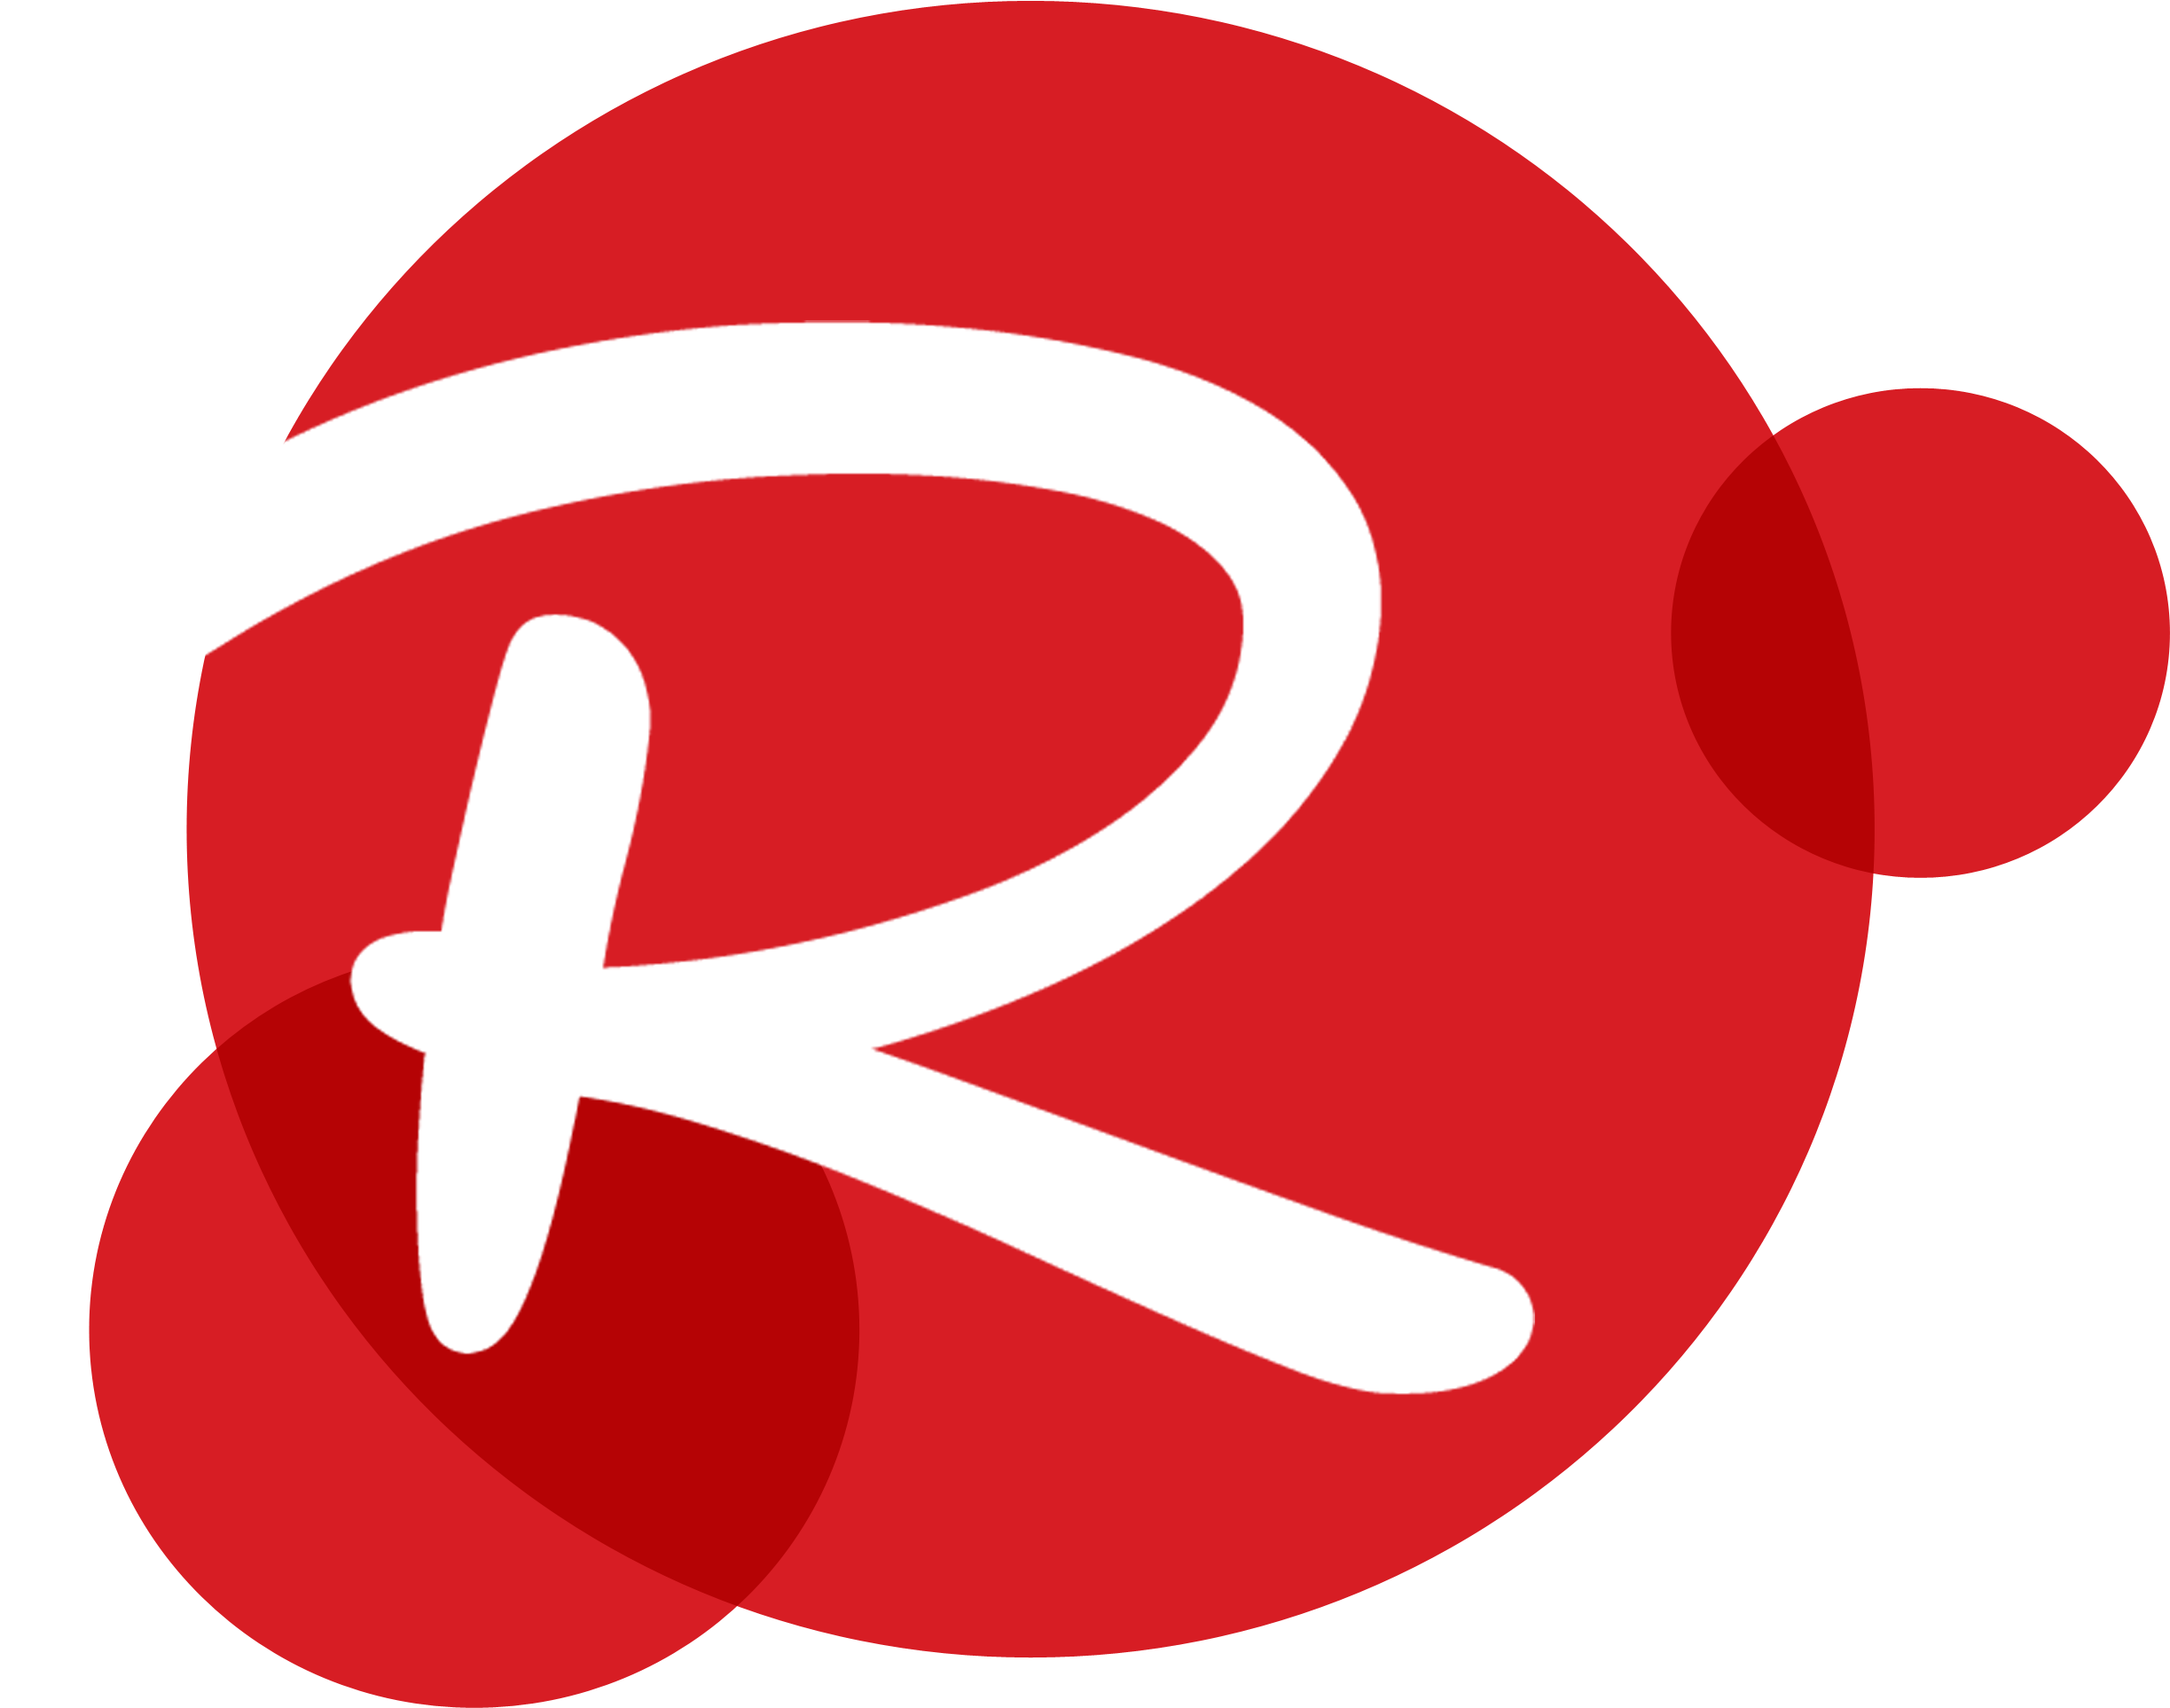 R 3600*2700 Transprent Png Free Download - R Logo Png (3600x2700)